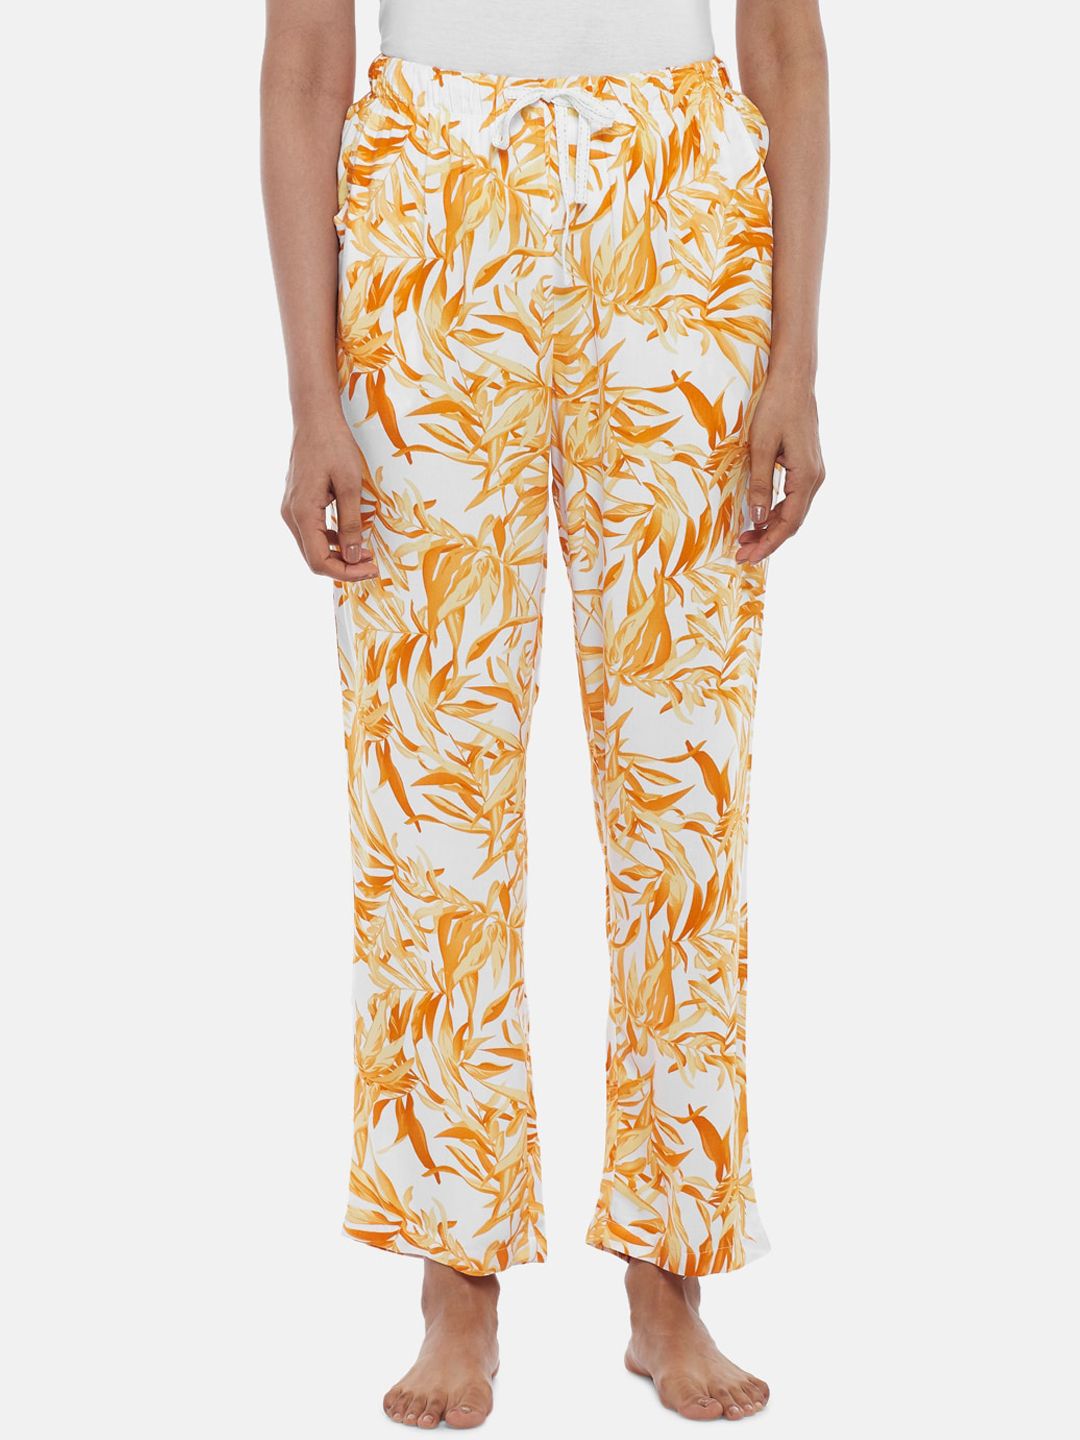 Dreamz by Pantaloons Women White & Orange Printed Lounge Pants Price in India